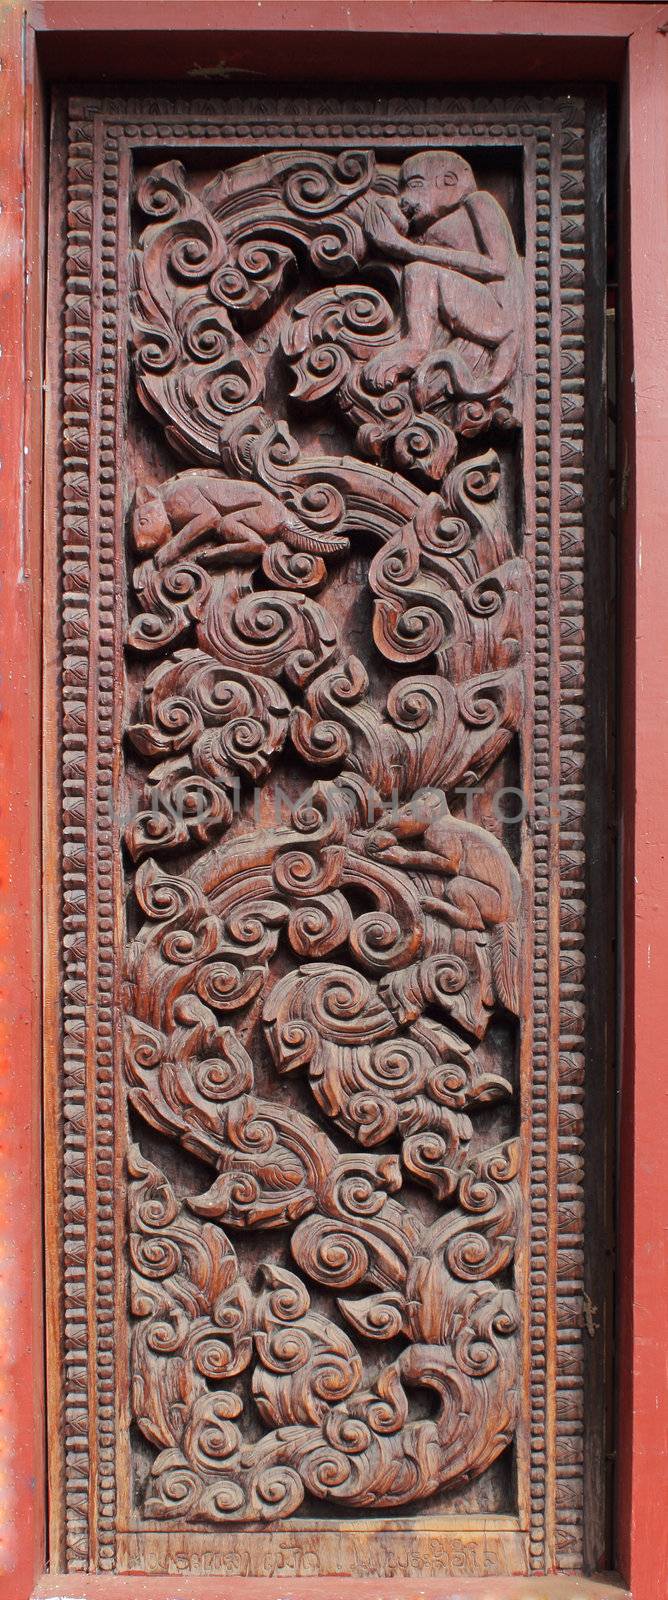 Decorated wooden beside door in Buddhist temple, Laos